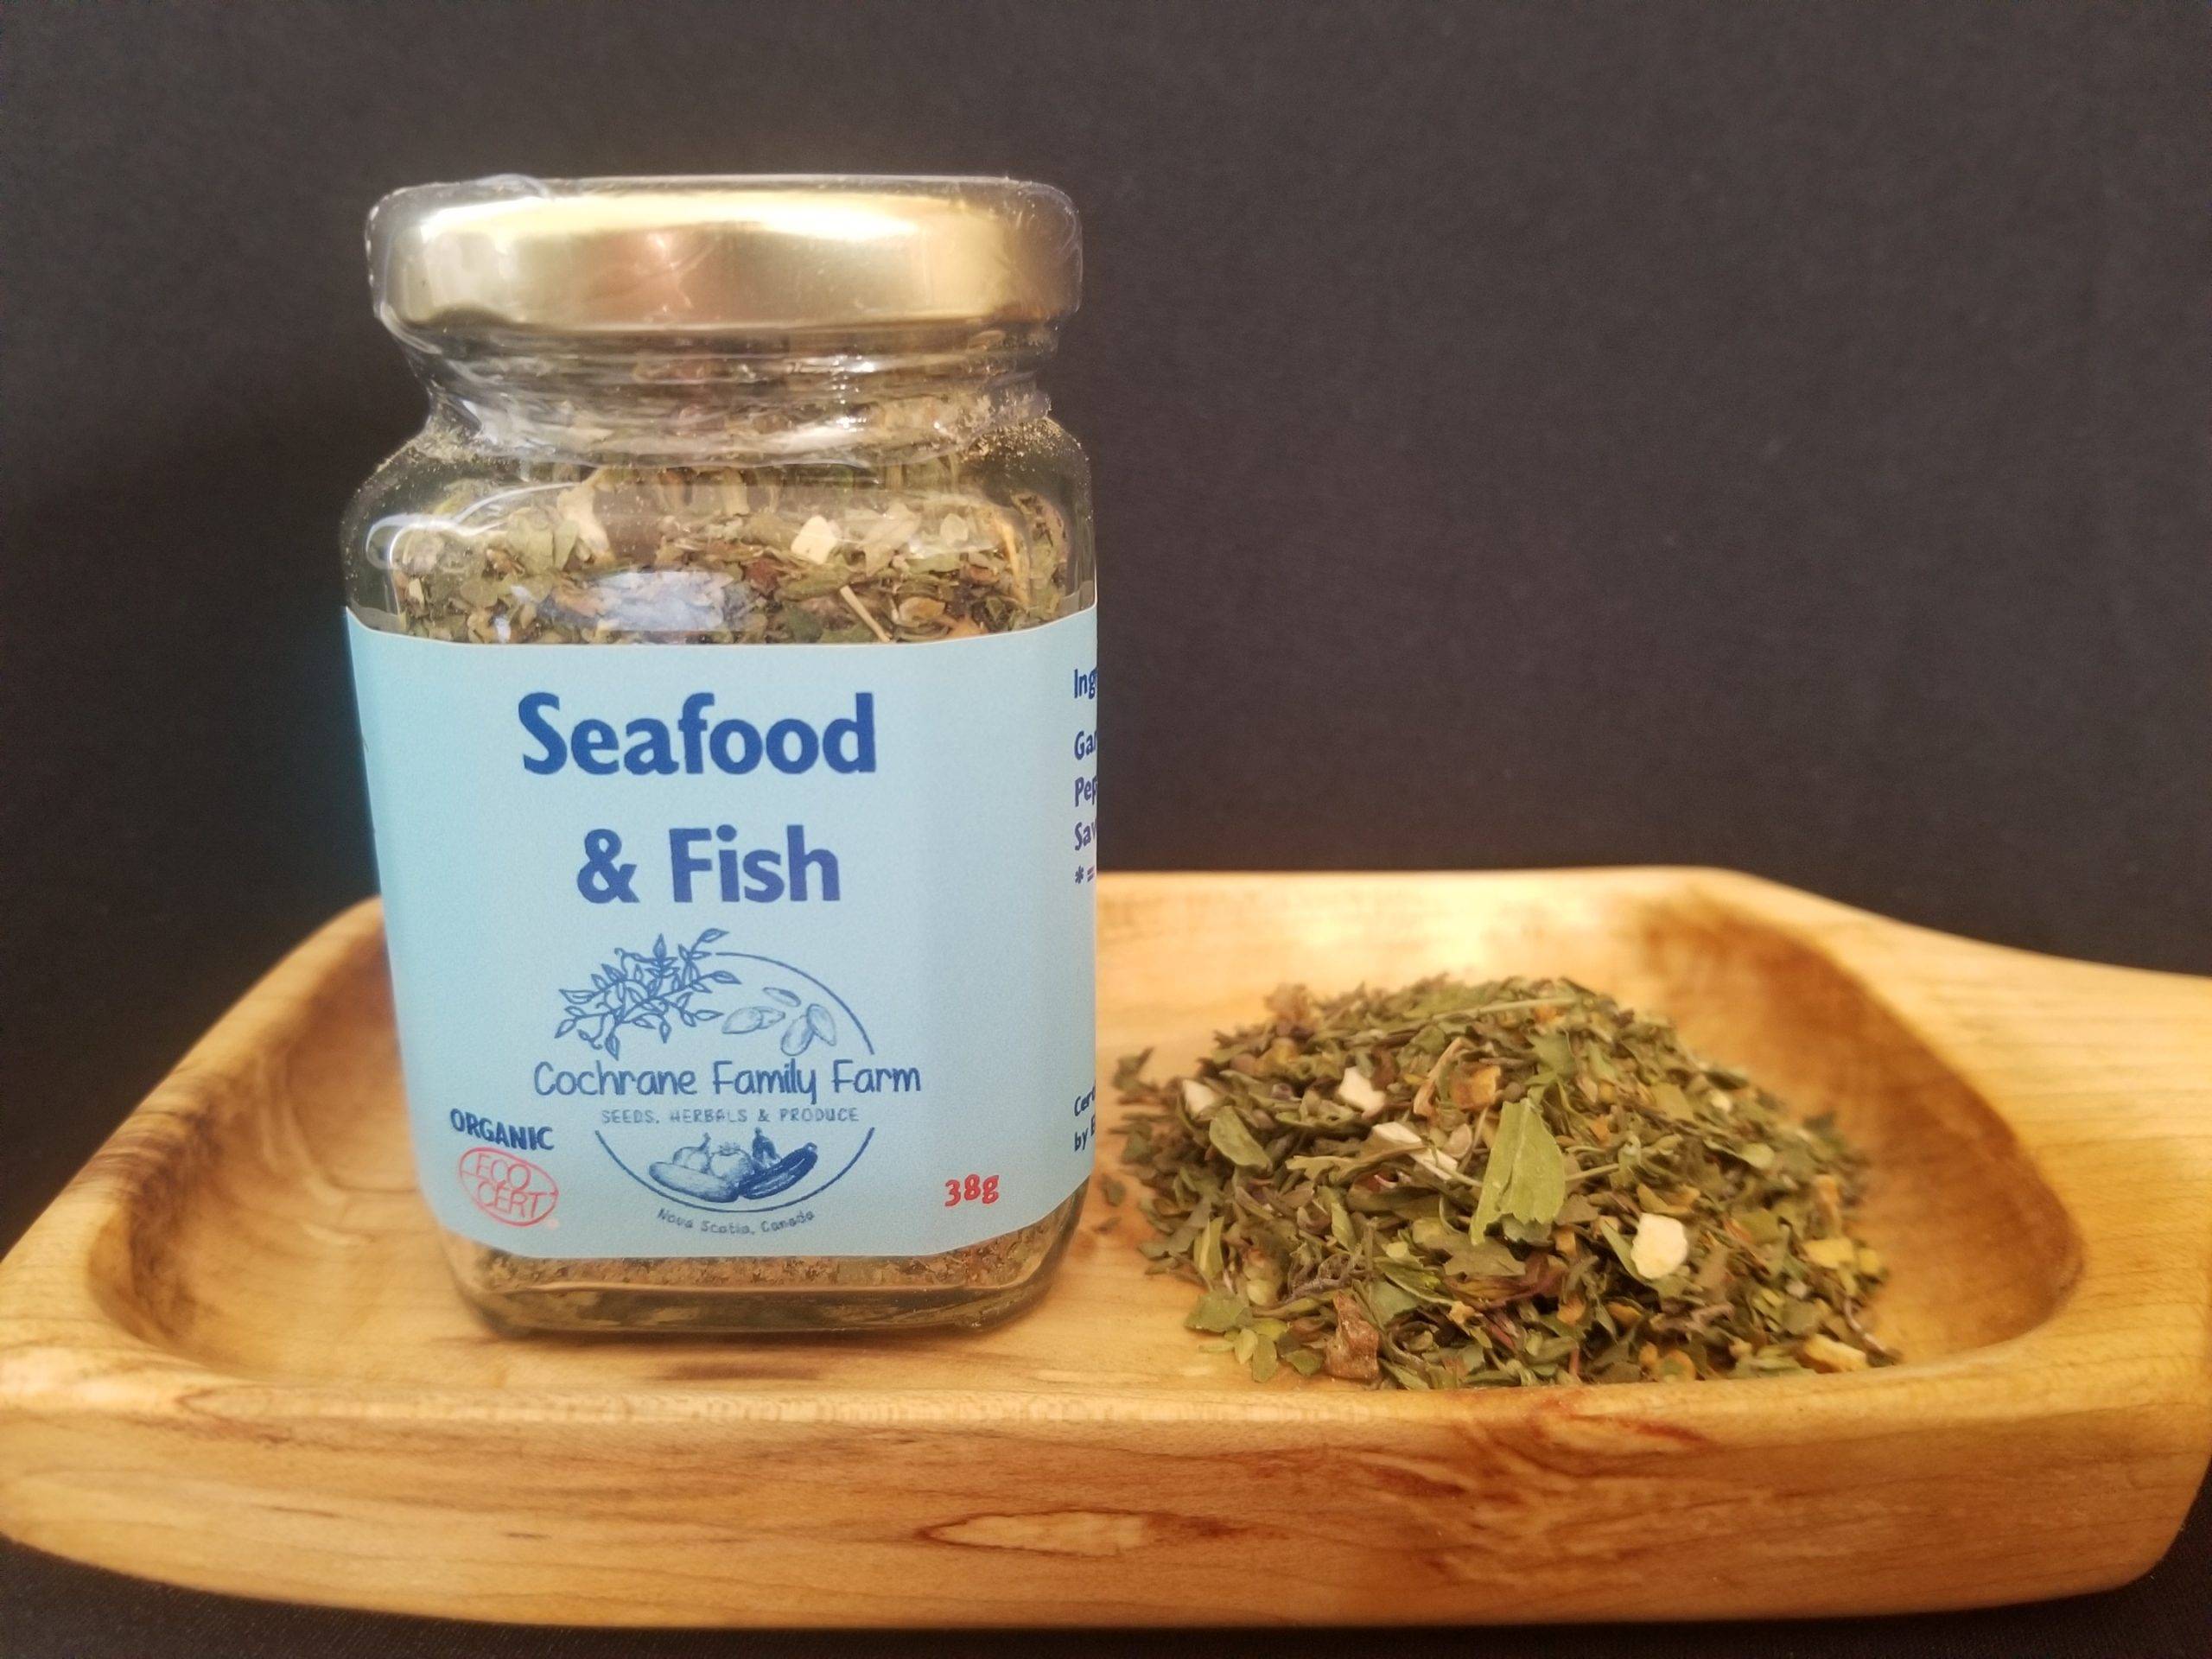 Seafood & Fish Spice Certified Organic